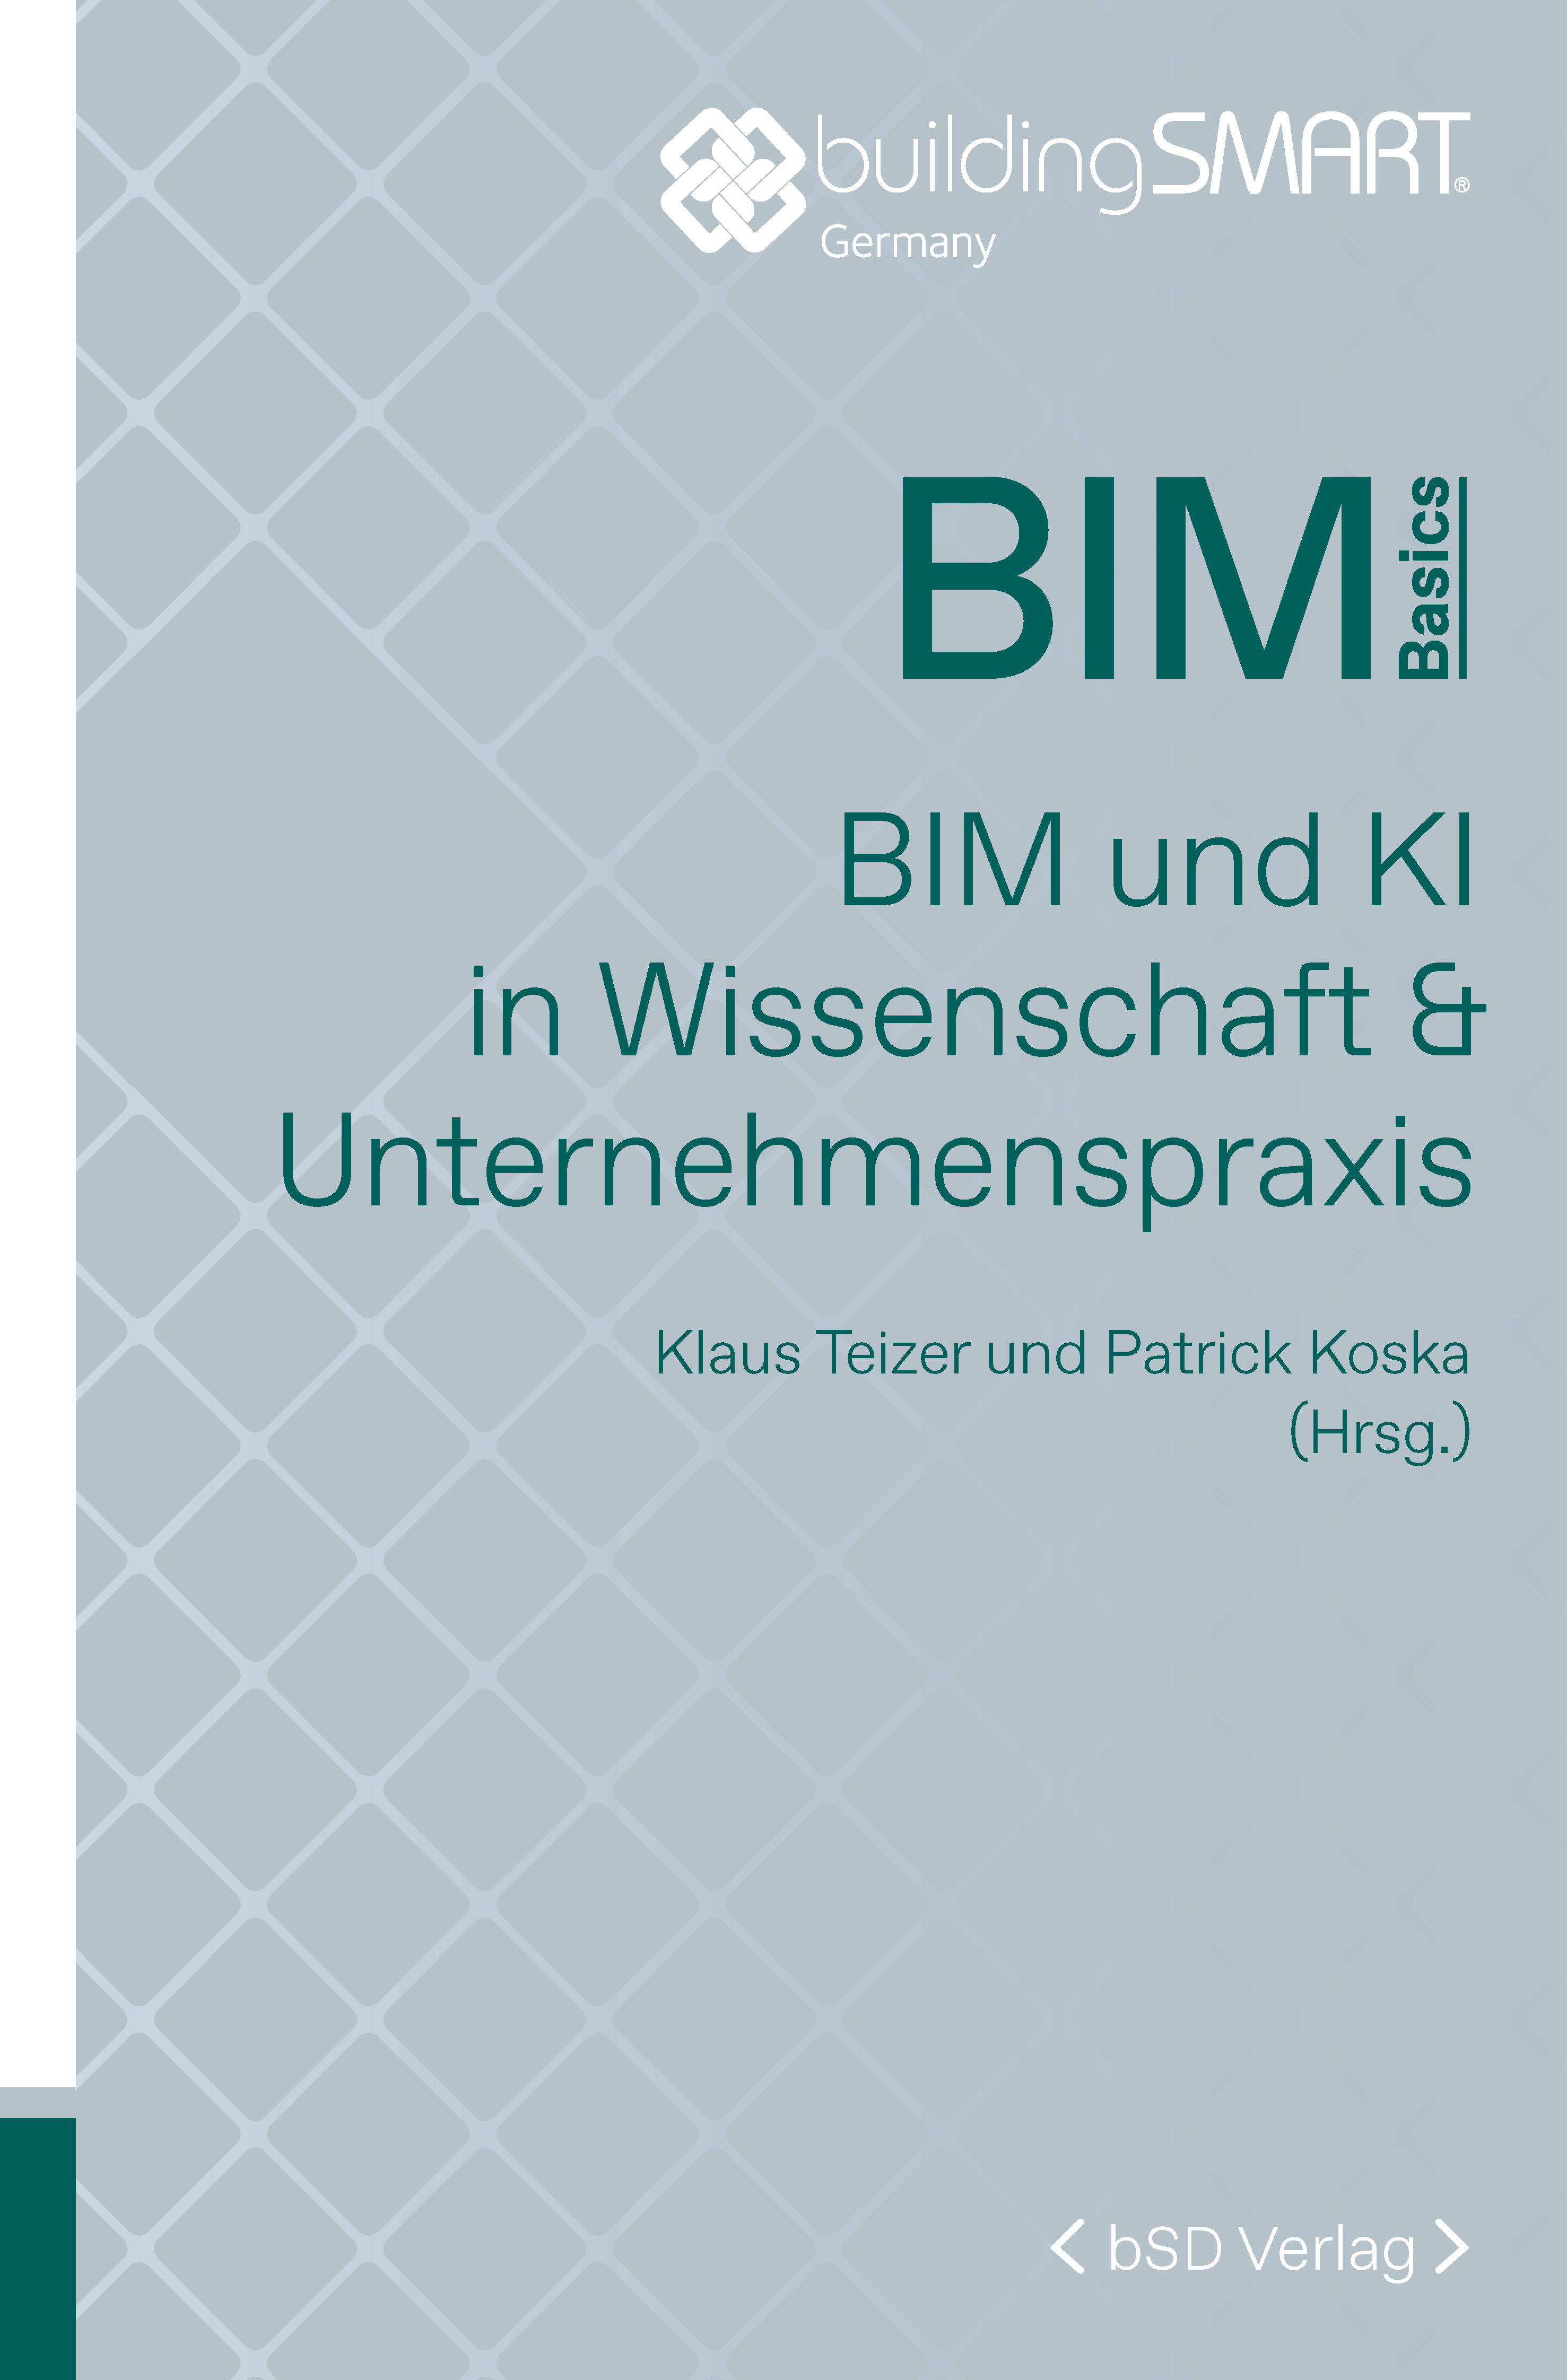 bSD Verlag/BIM Basics: BIM + KI in Wissenschaft + Unternehmenspraxis